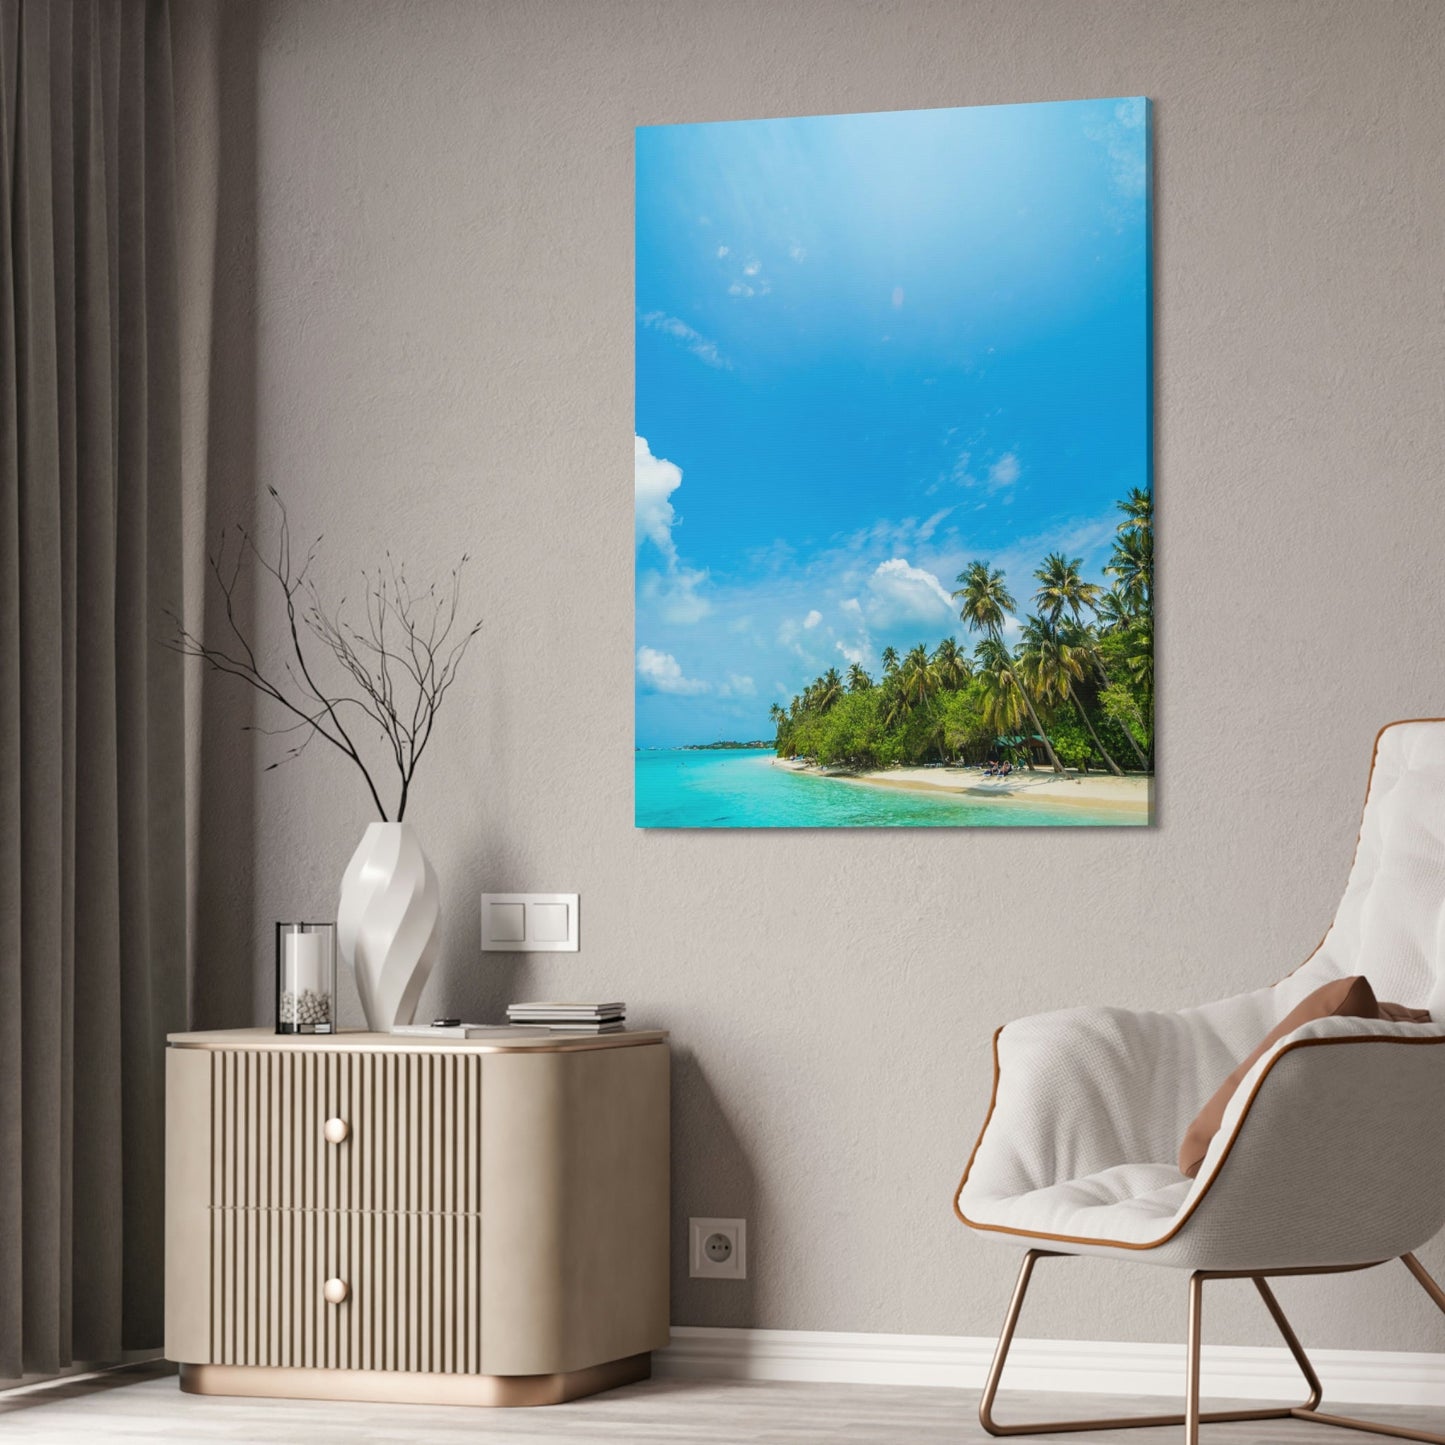 Coastal Charm: Art Print of a Beautiful Island Beach Scene on a Framed Poster